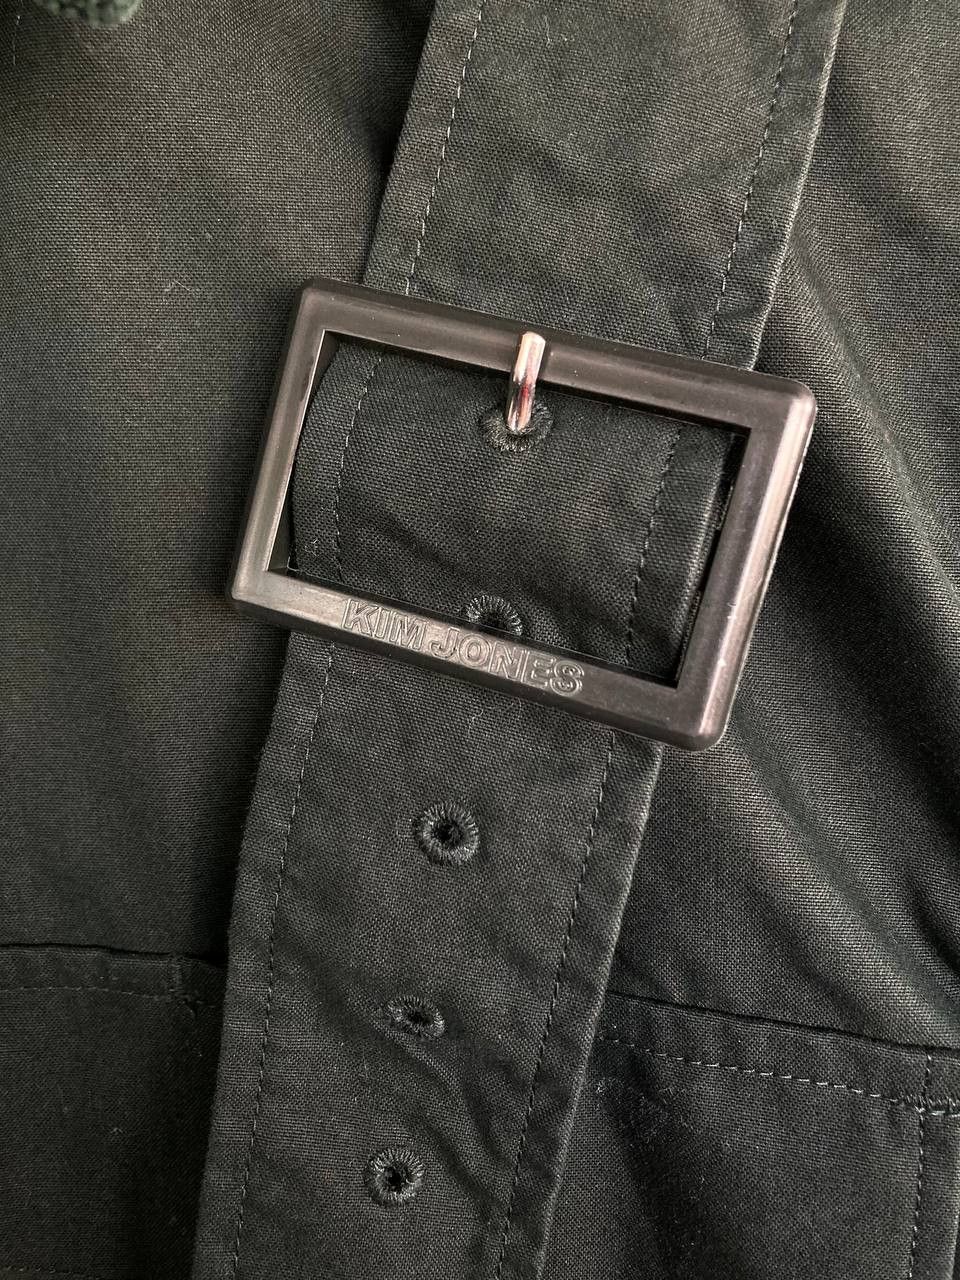 AW18 Kim Jones x GU Military Strap Buttoned Shirt - 6